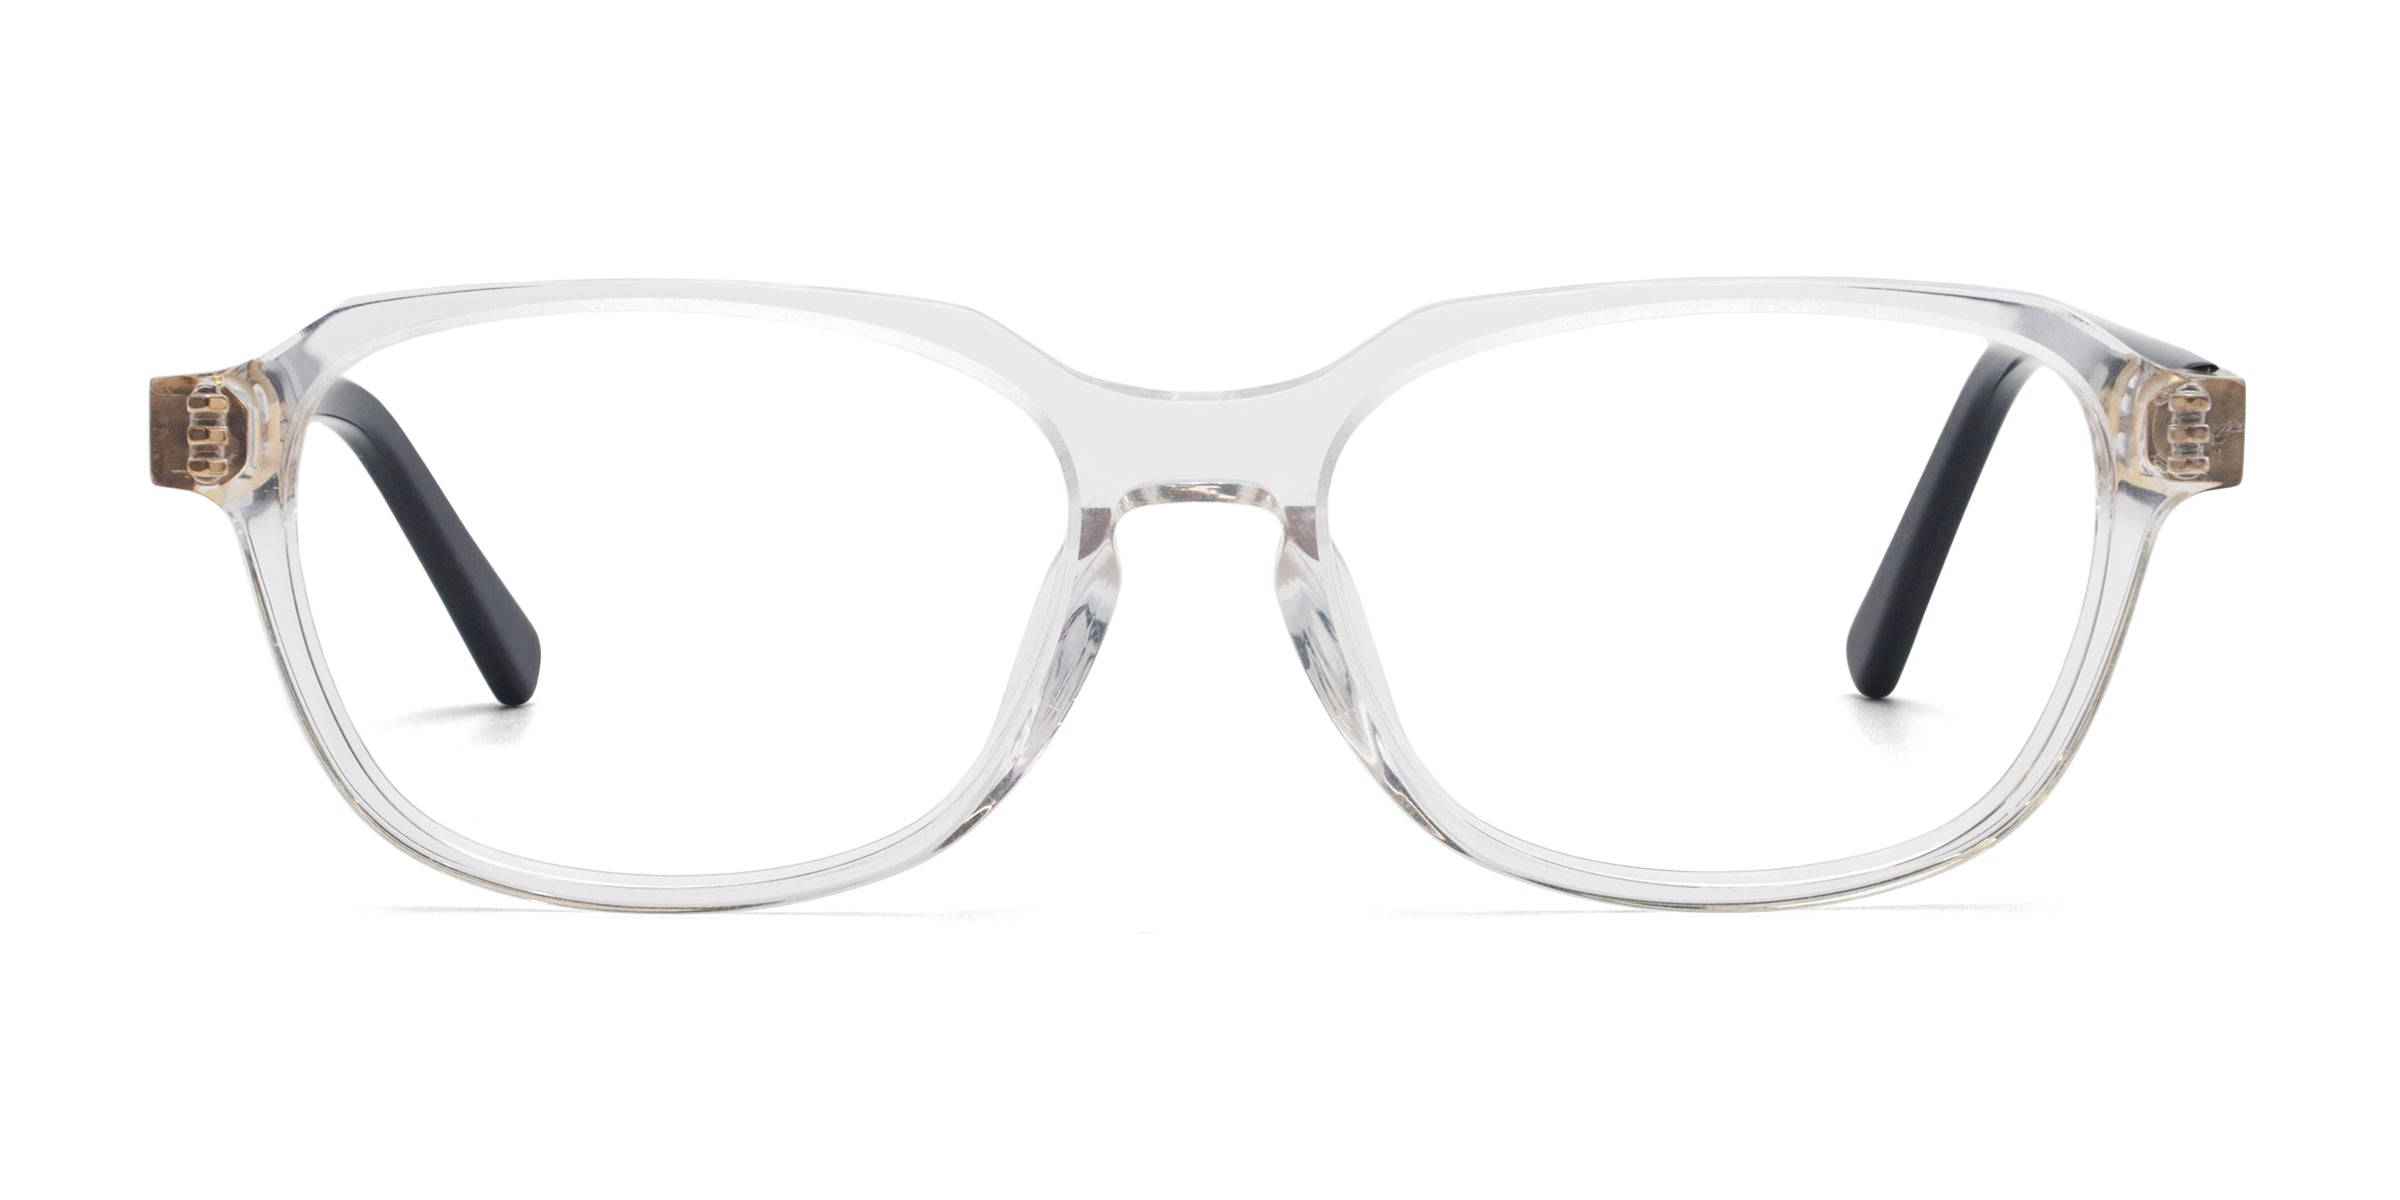 Dan Rectangle Clear Black eyeglasses frames front view